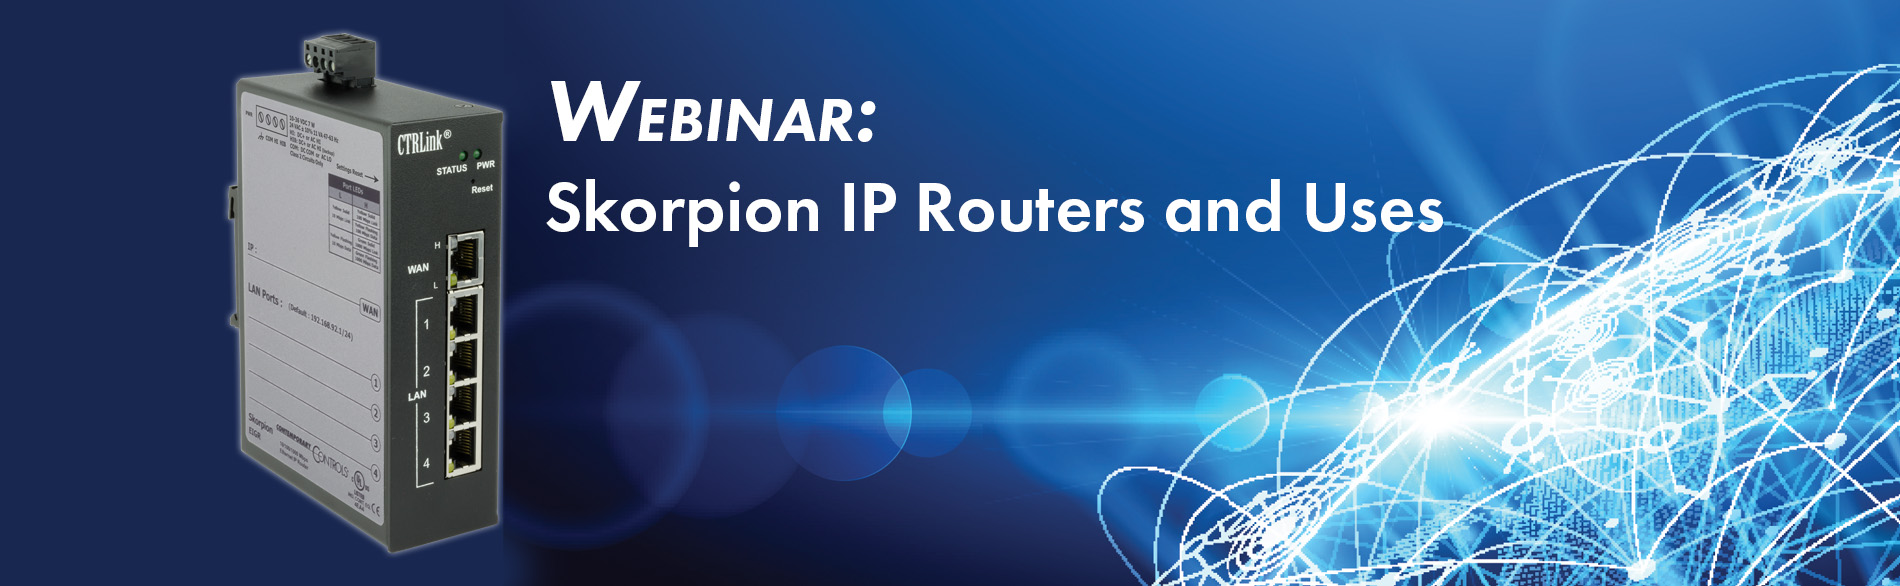 Skorpion IP Routers and Uses Webinar